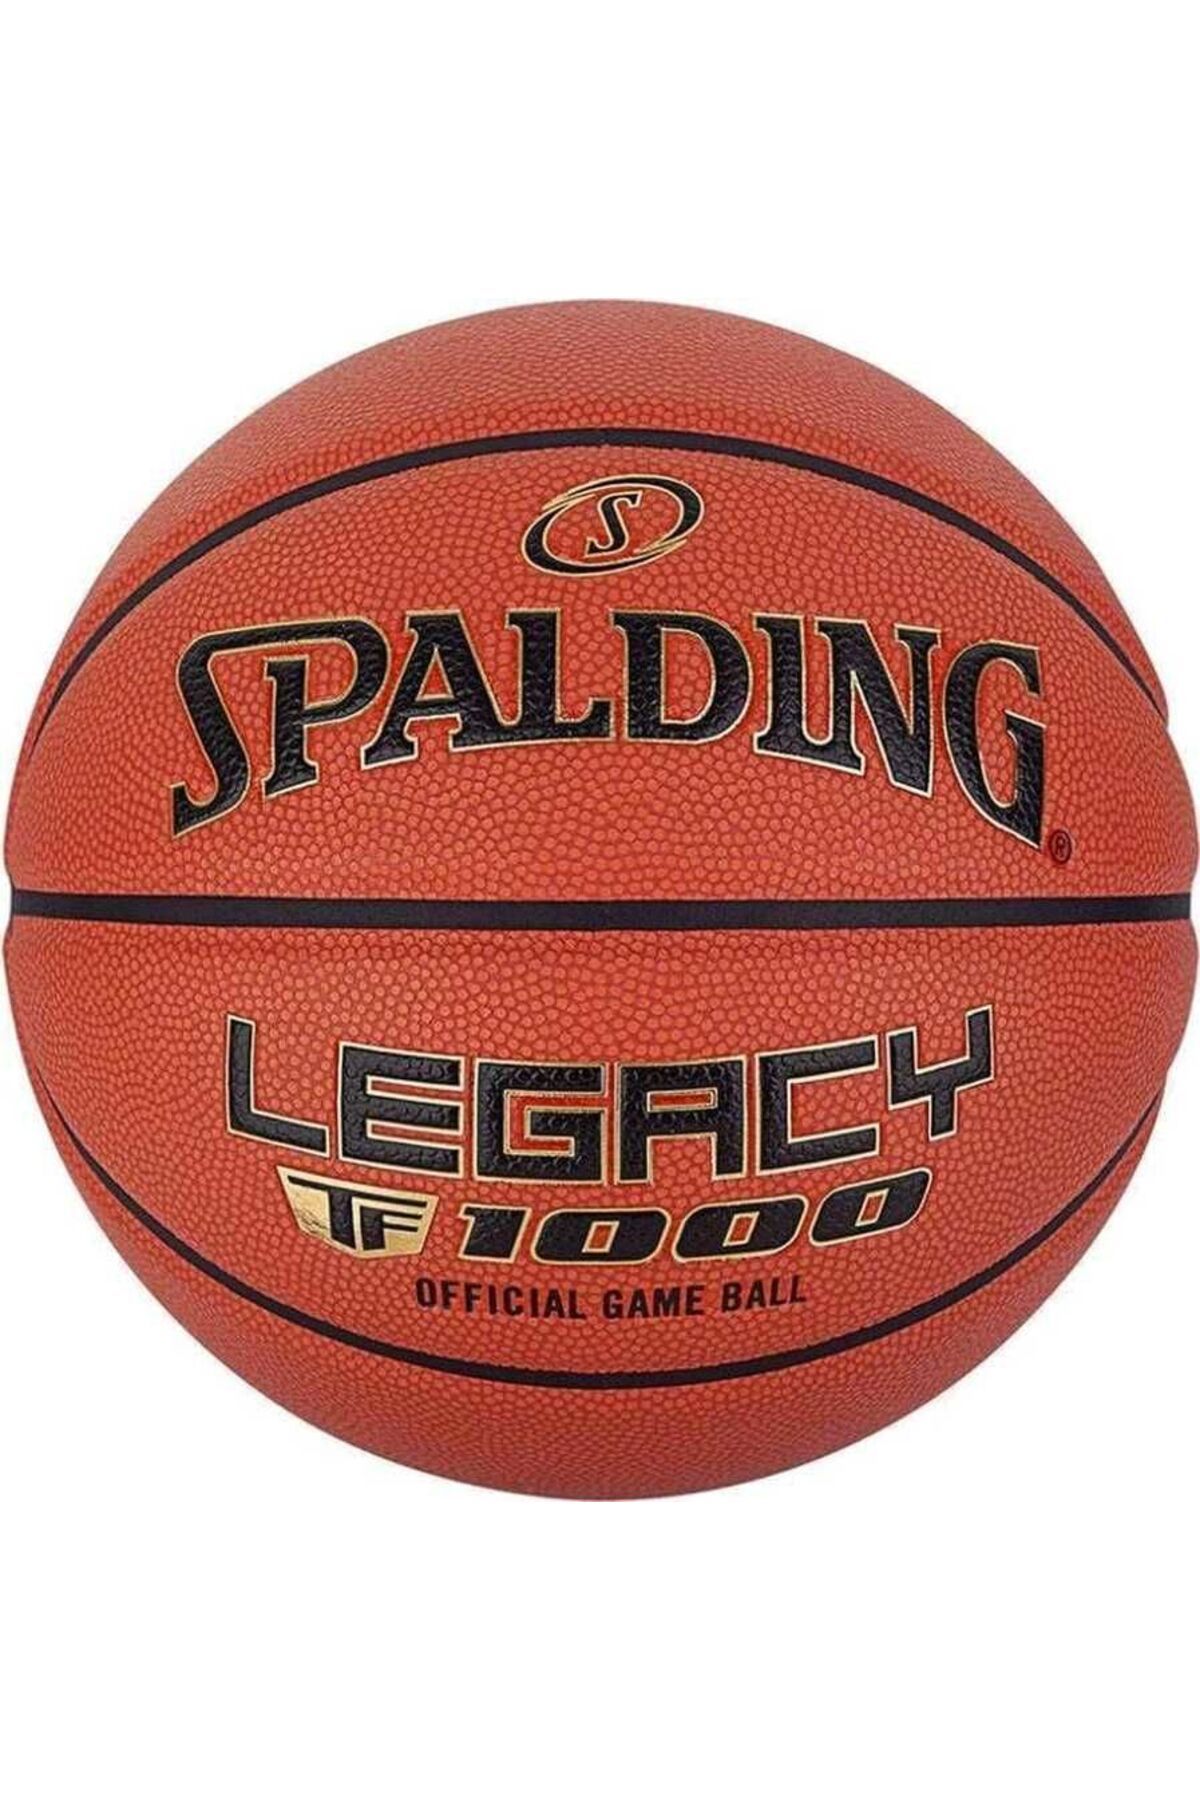 Spalding TF-1000 Legacy FIBA No7 Basketbol Topu 76963Z